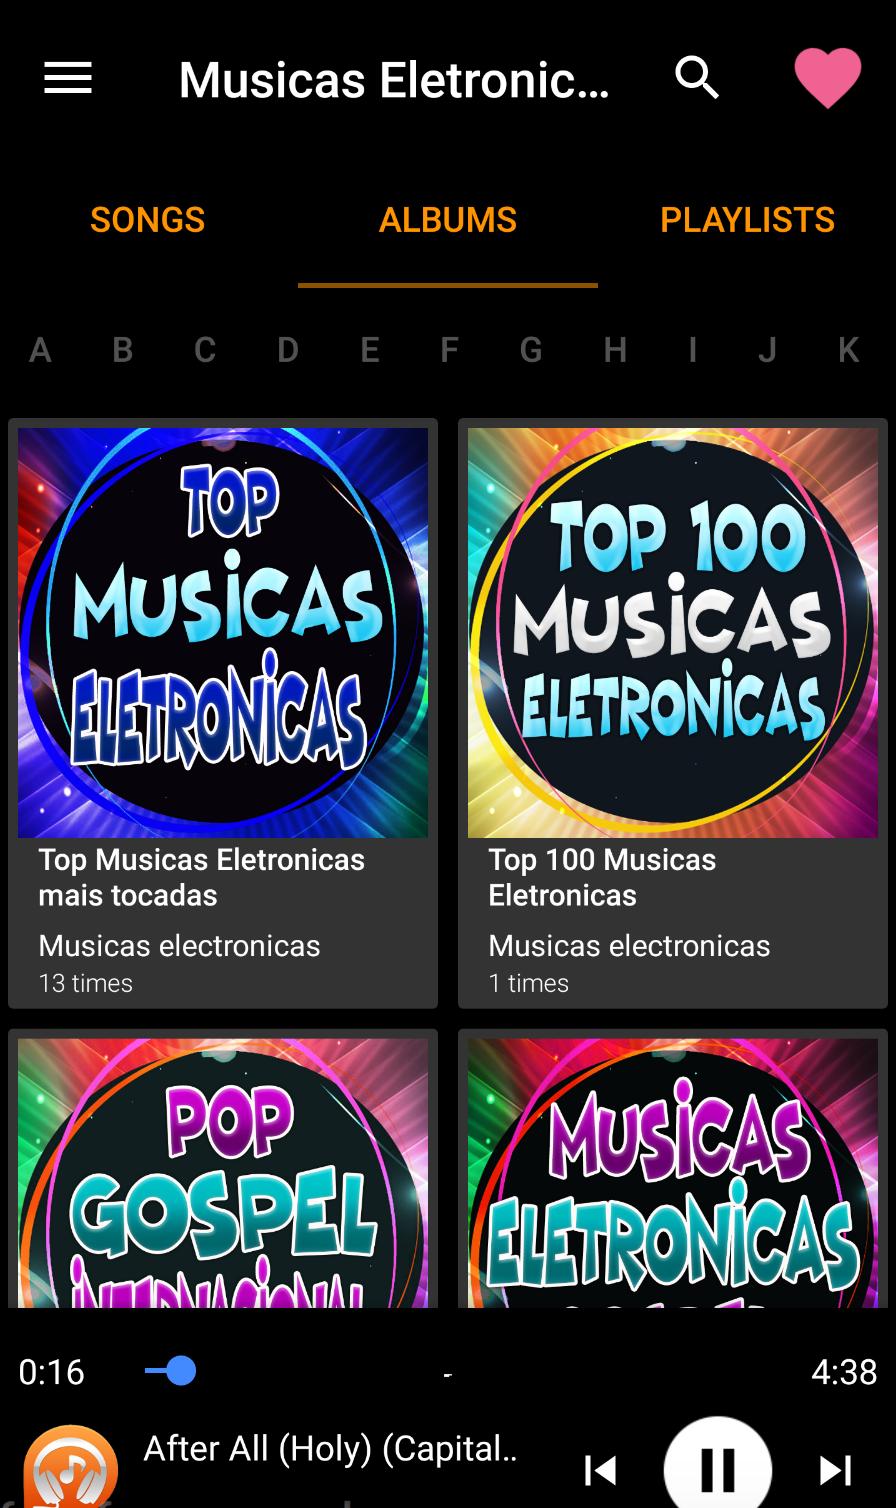 Musicas Eletronicas Gospel for Android - APK Download